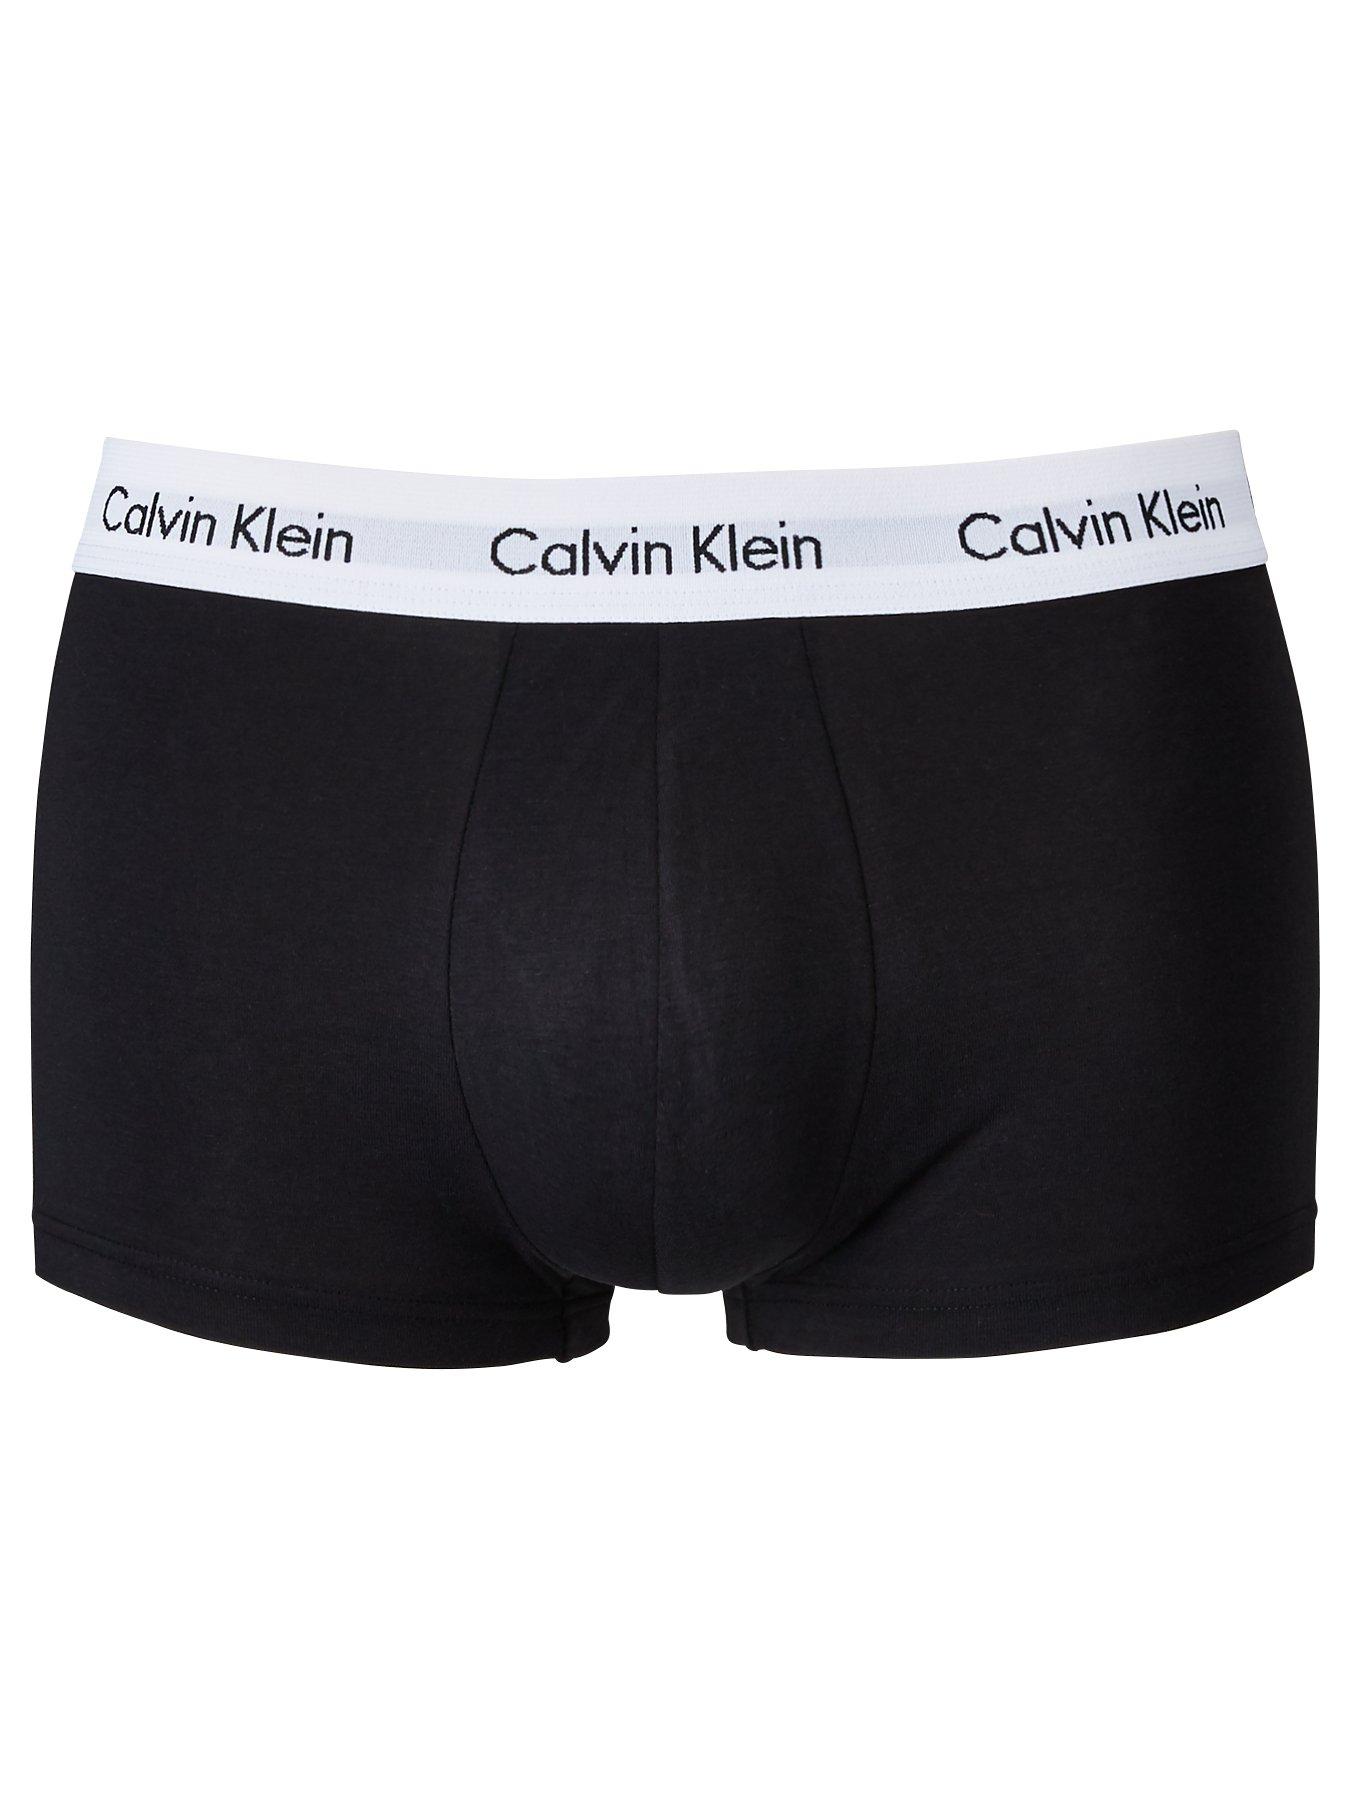 Calvin Klein 3 Pack Low Rise Trunks - Black | very.co.uk